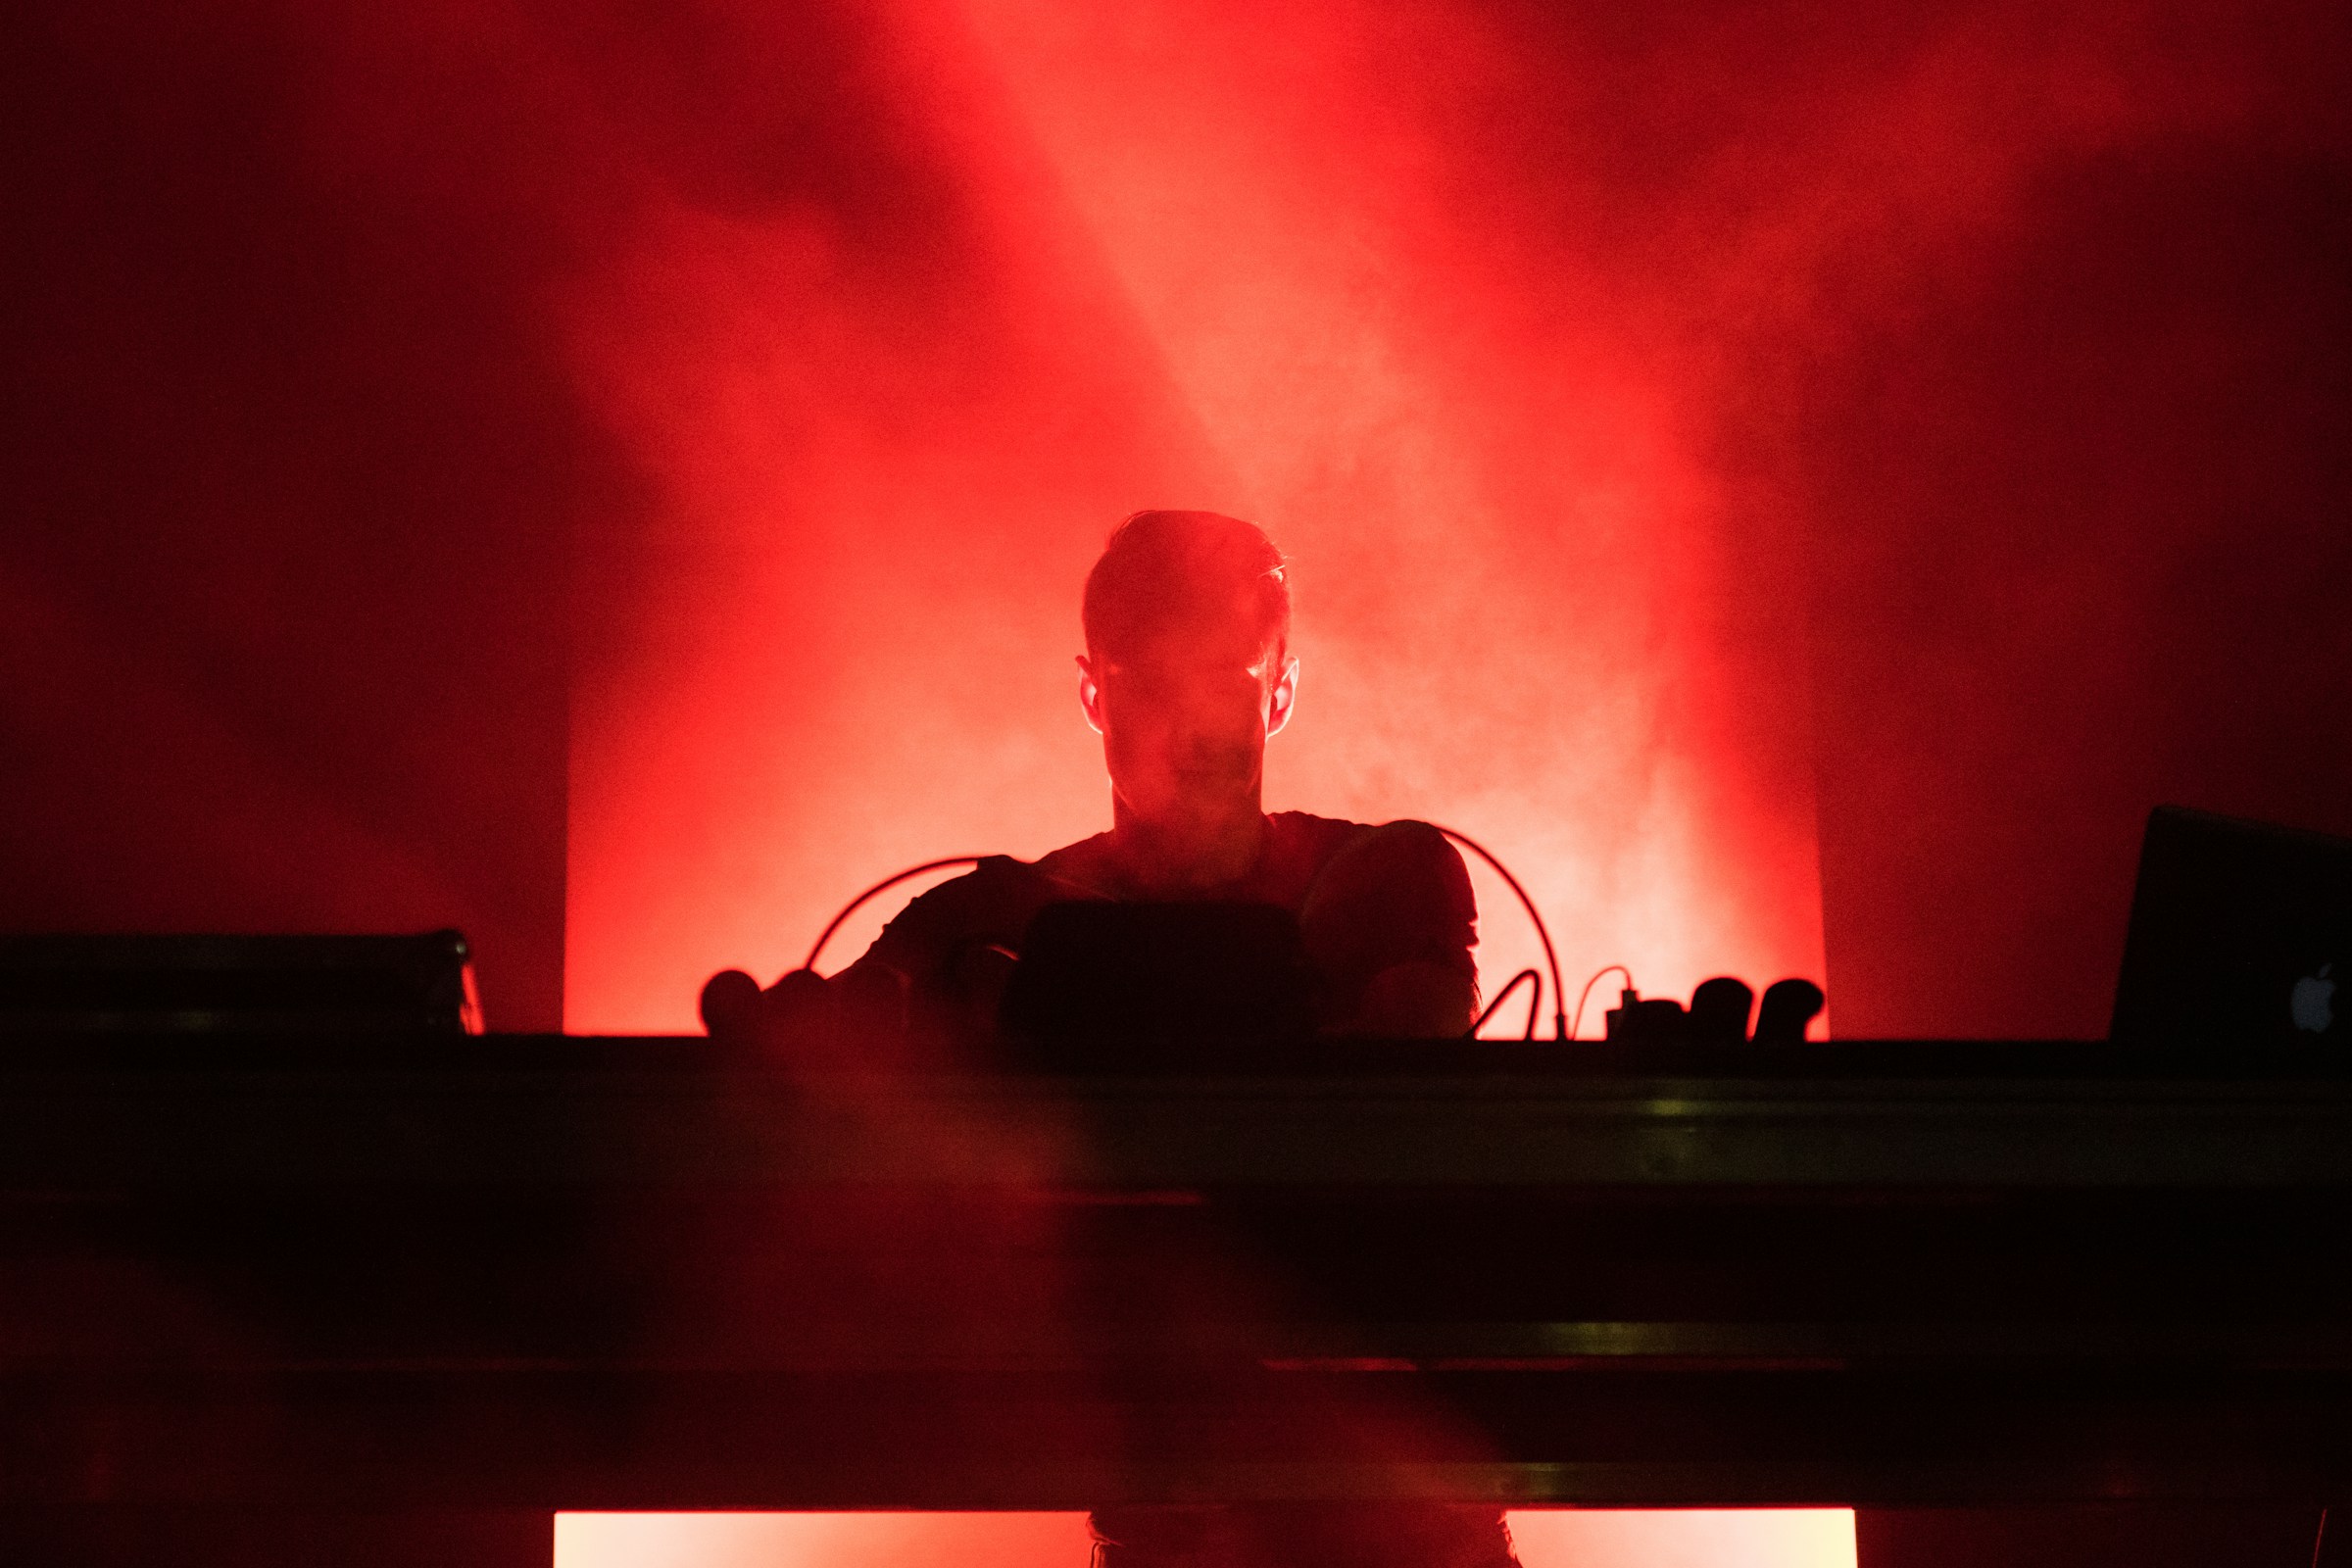 DJ playing music in red lights | Source: Unsplash